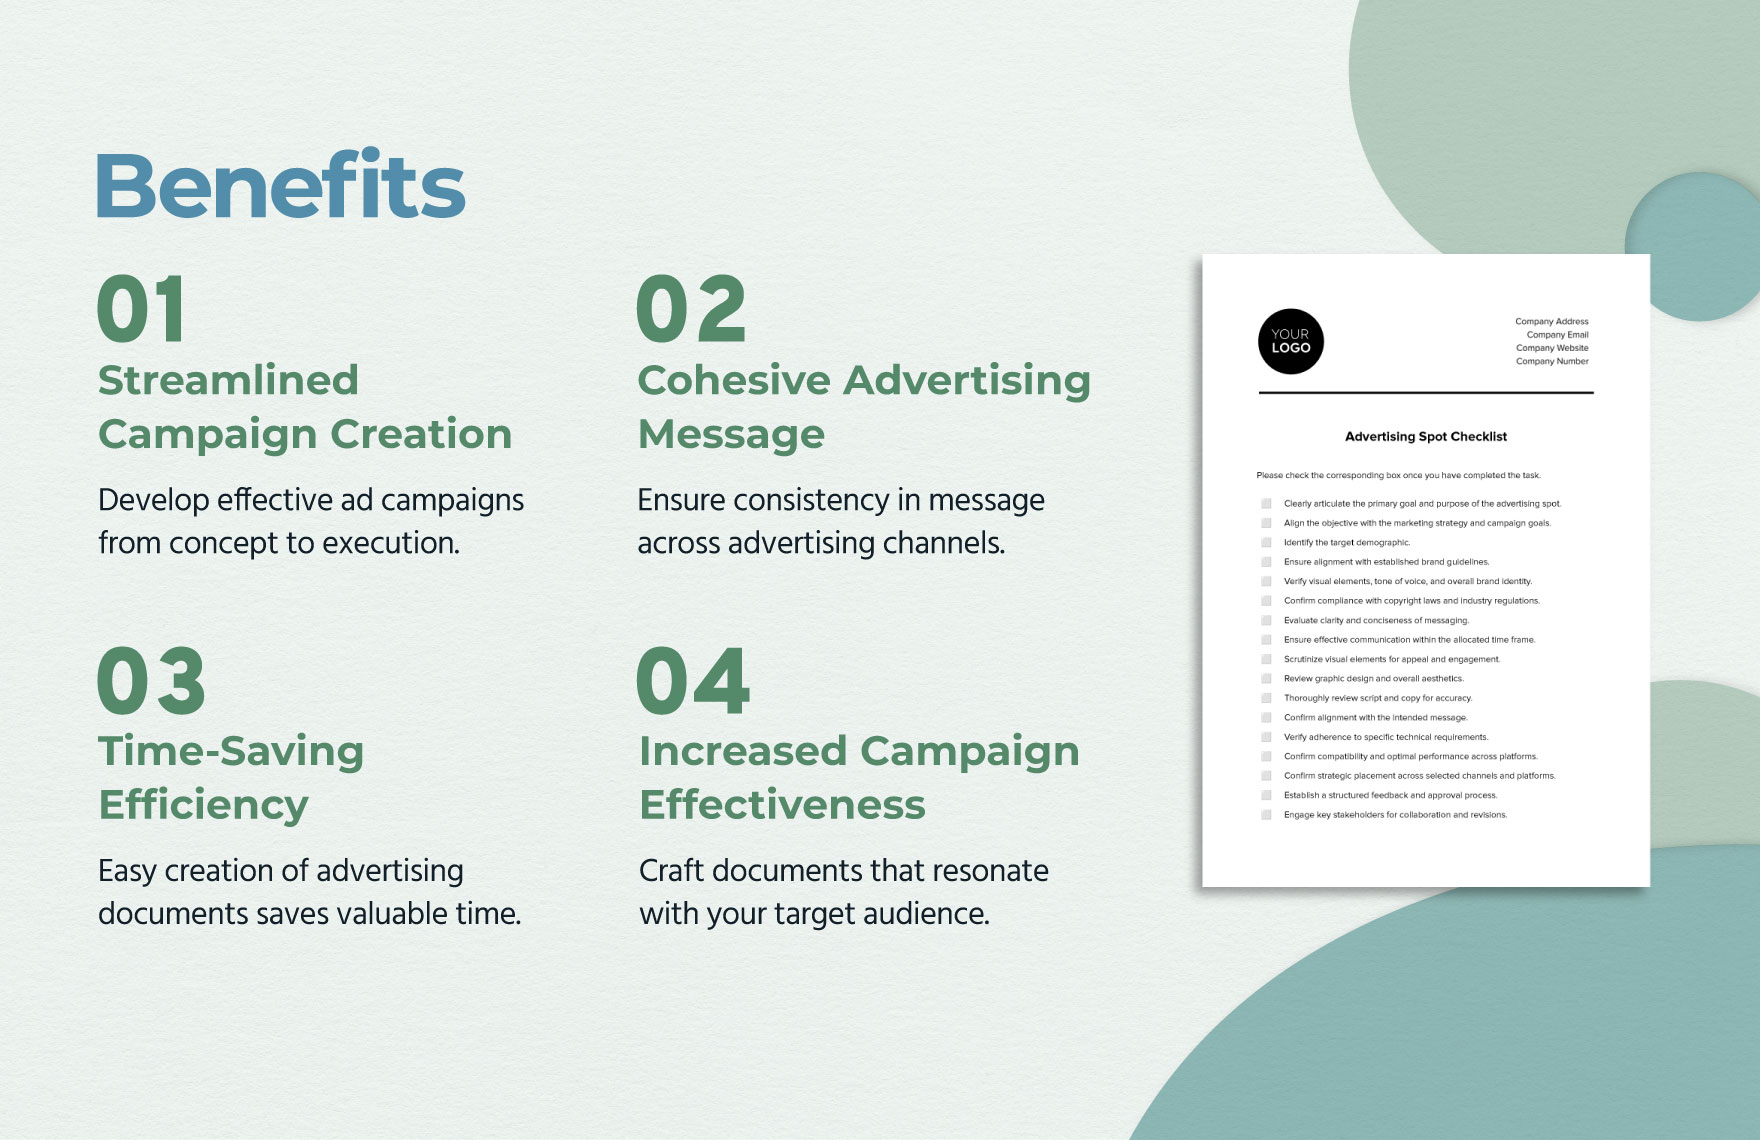 Advertising Spot Checklist Template